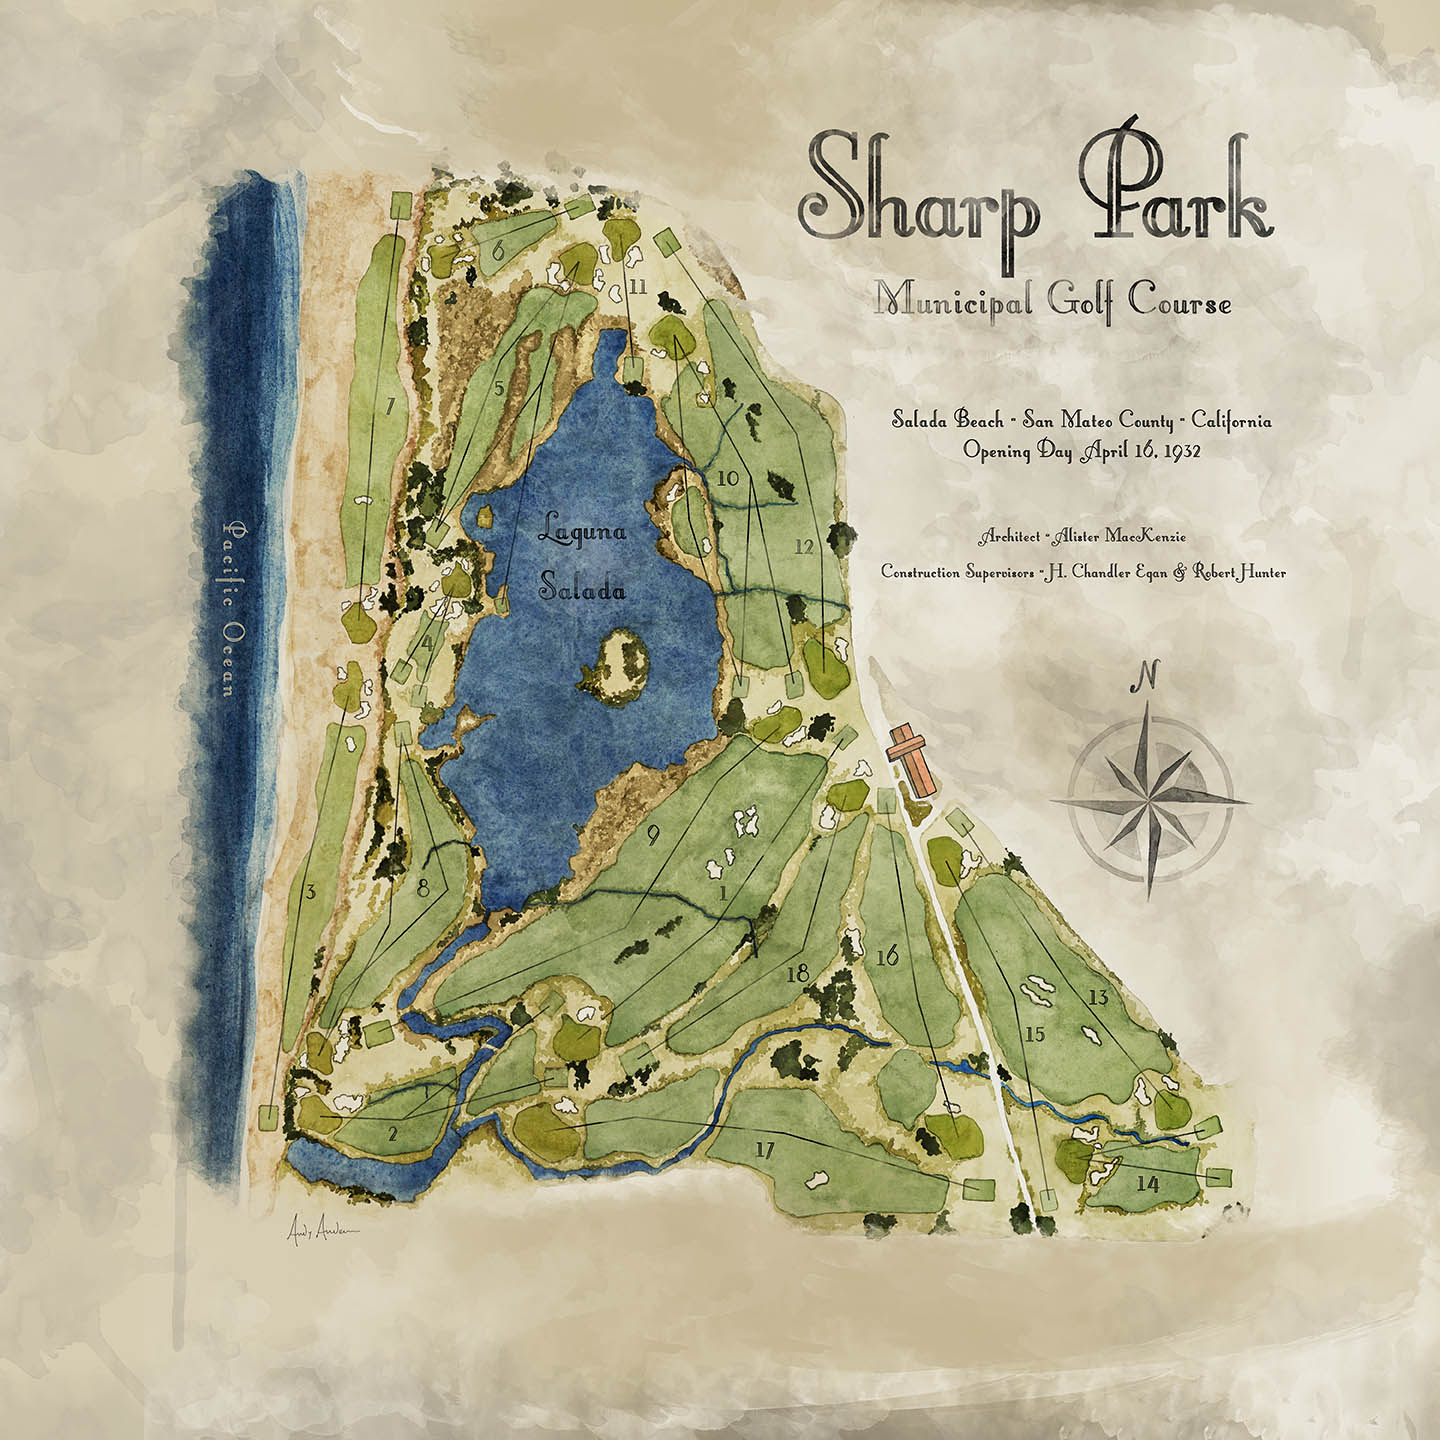 A course map of Sharp Park Golf Course